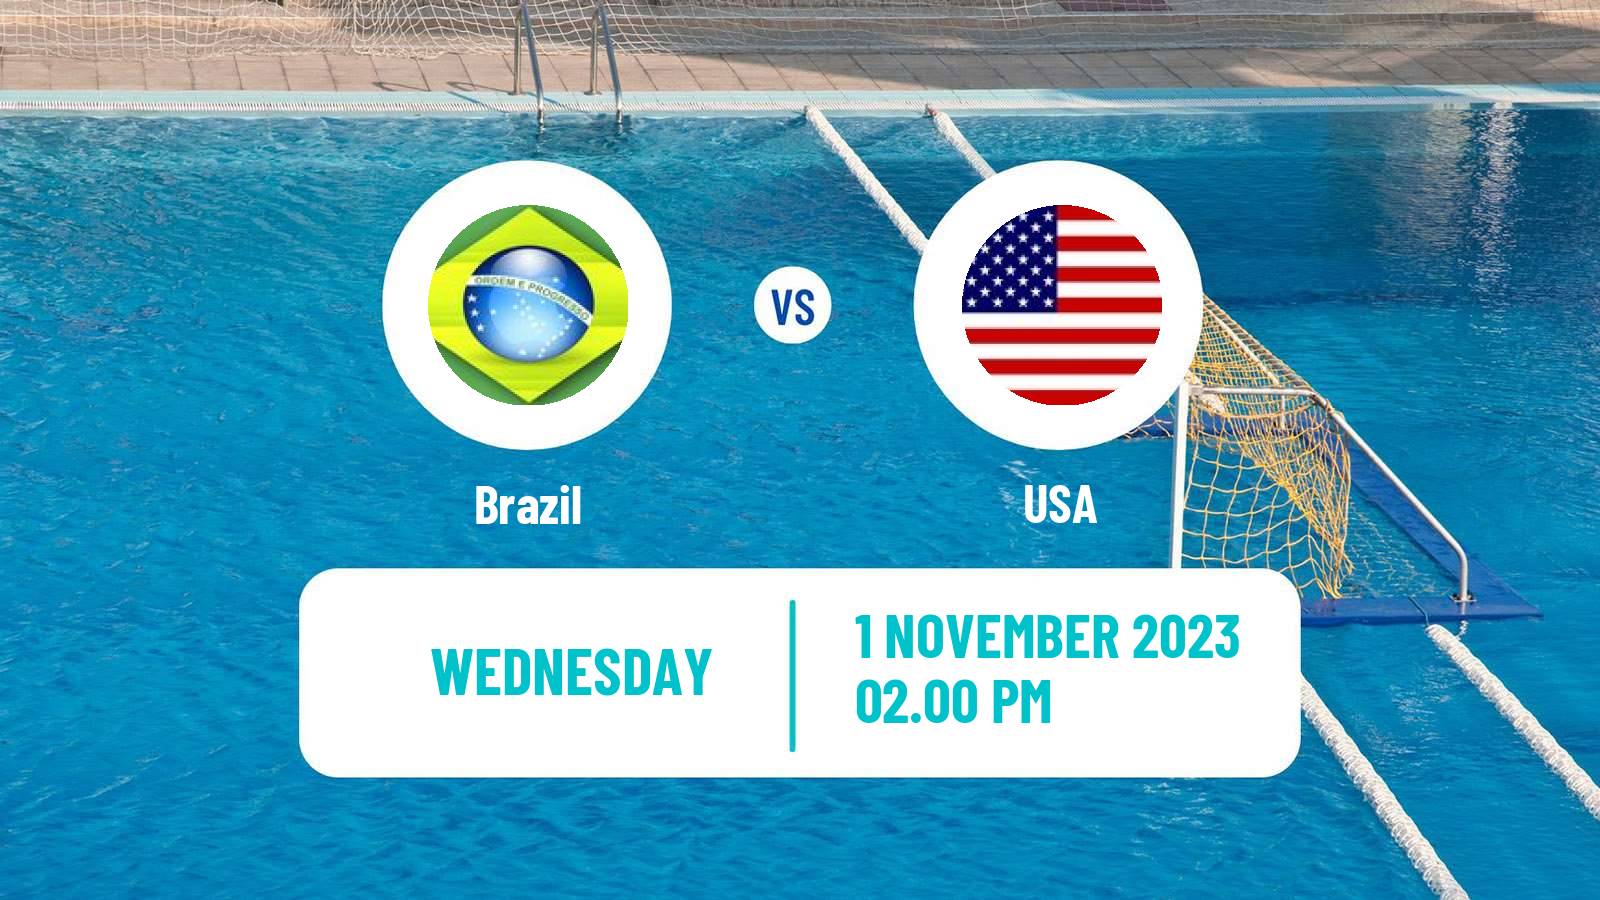 Water polo Pan American Games Water Polo Brazil - USA